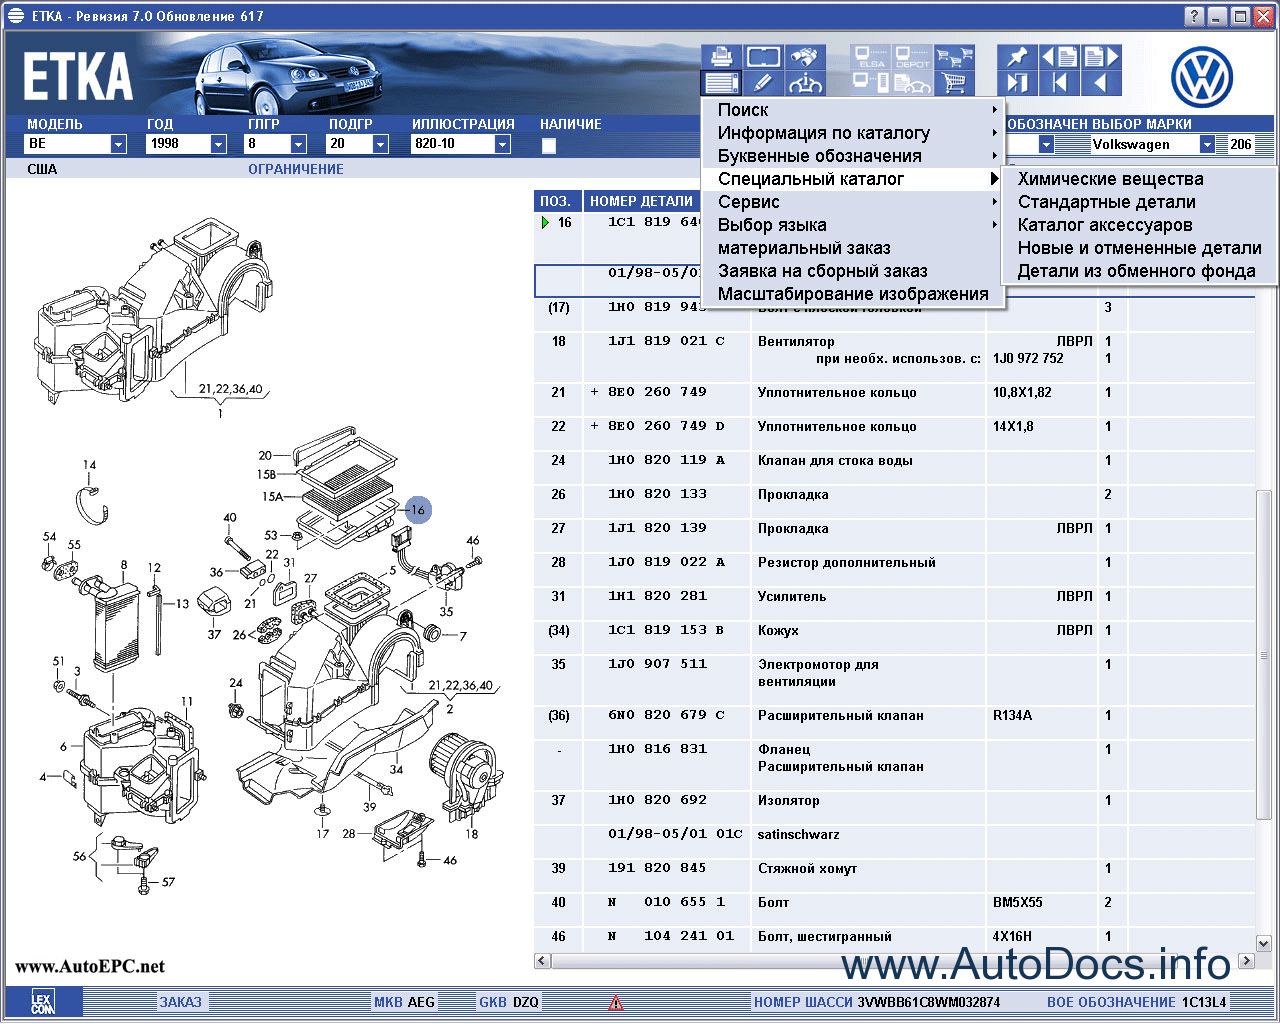 Audi VW ETKA 7.2 spare parts catalog all models Audi & Volkswagen for European, American